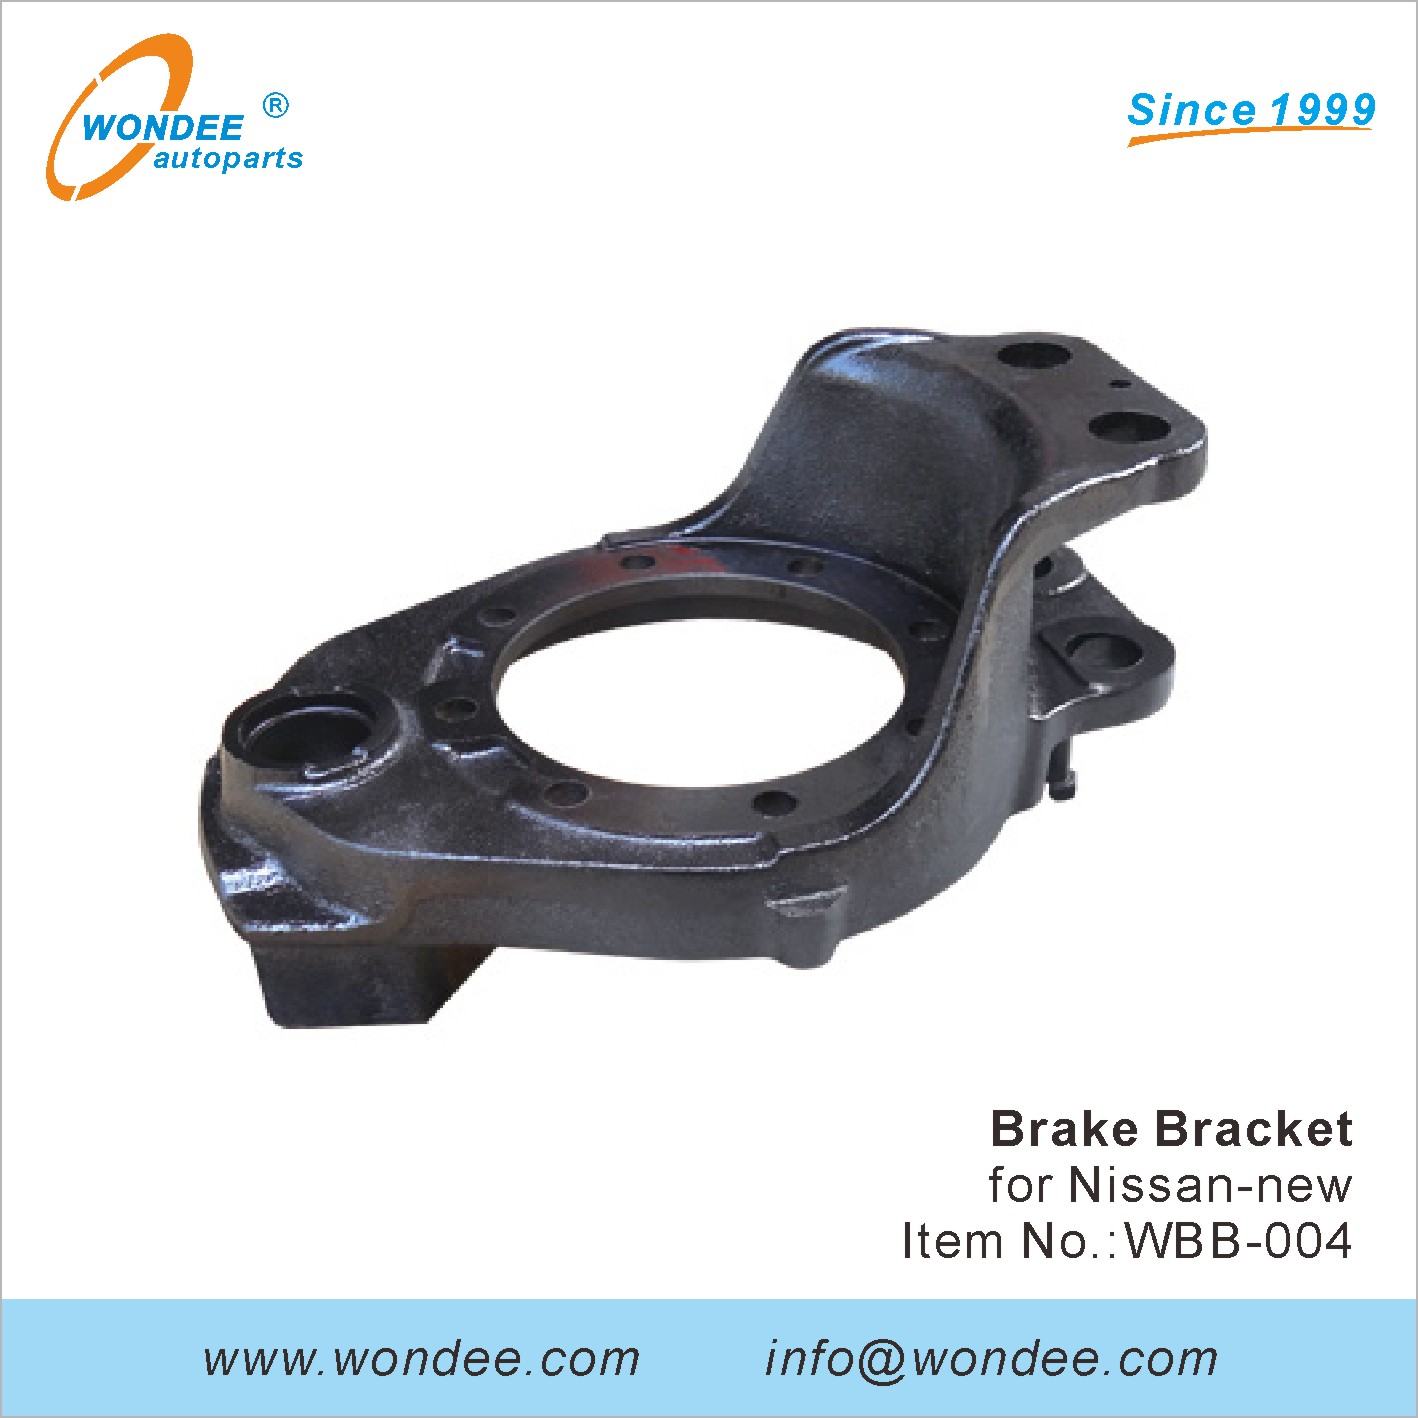 WONDEE brake bracket (4)